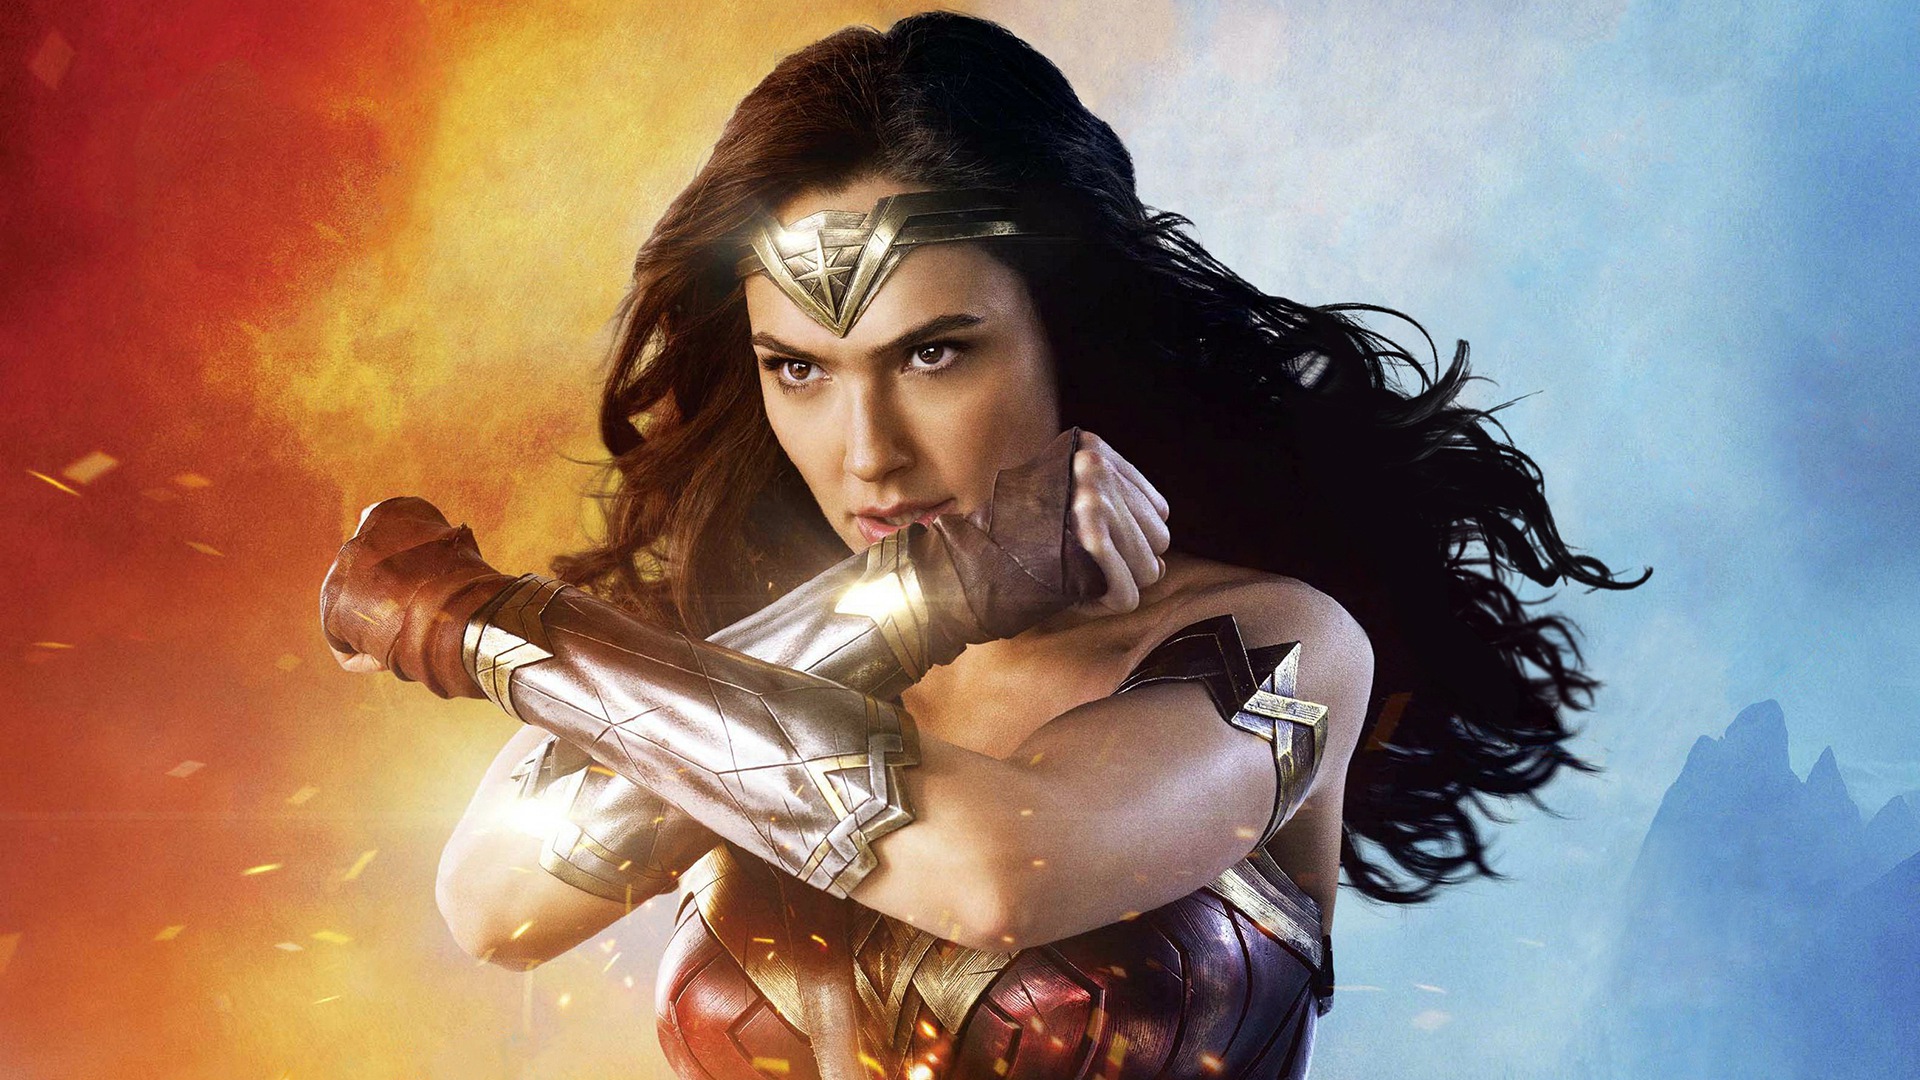 Wonder Woman Movie Review